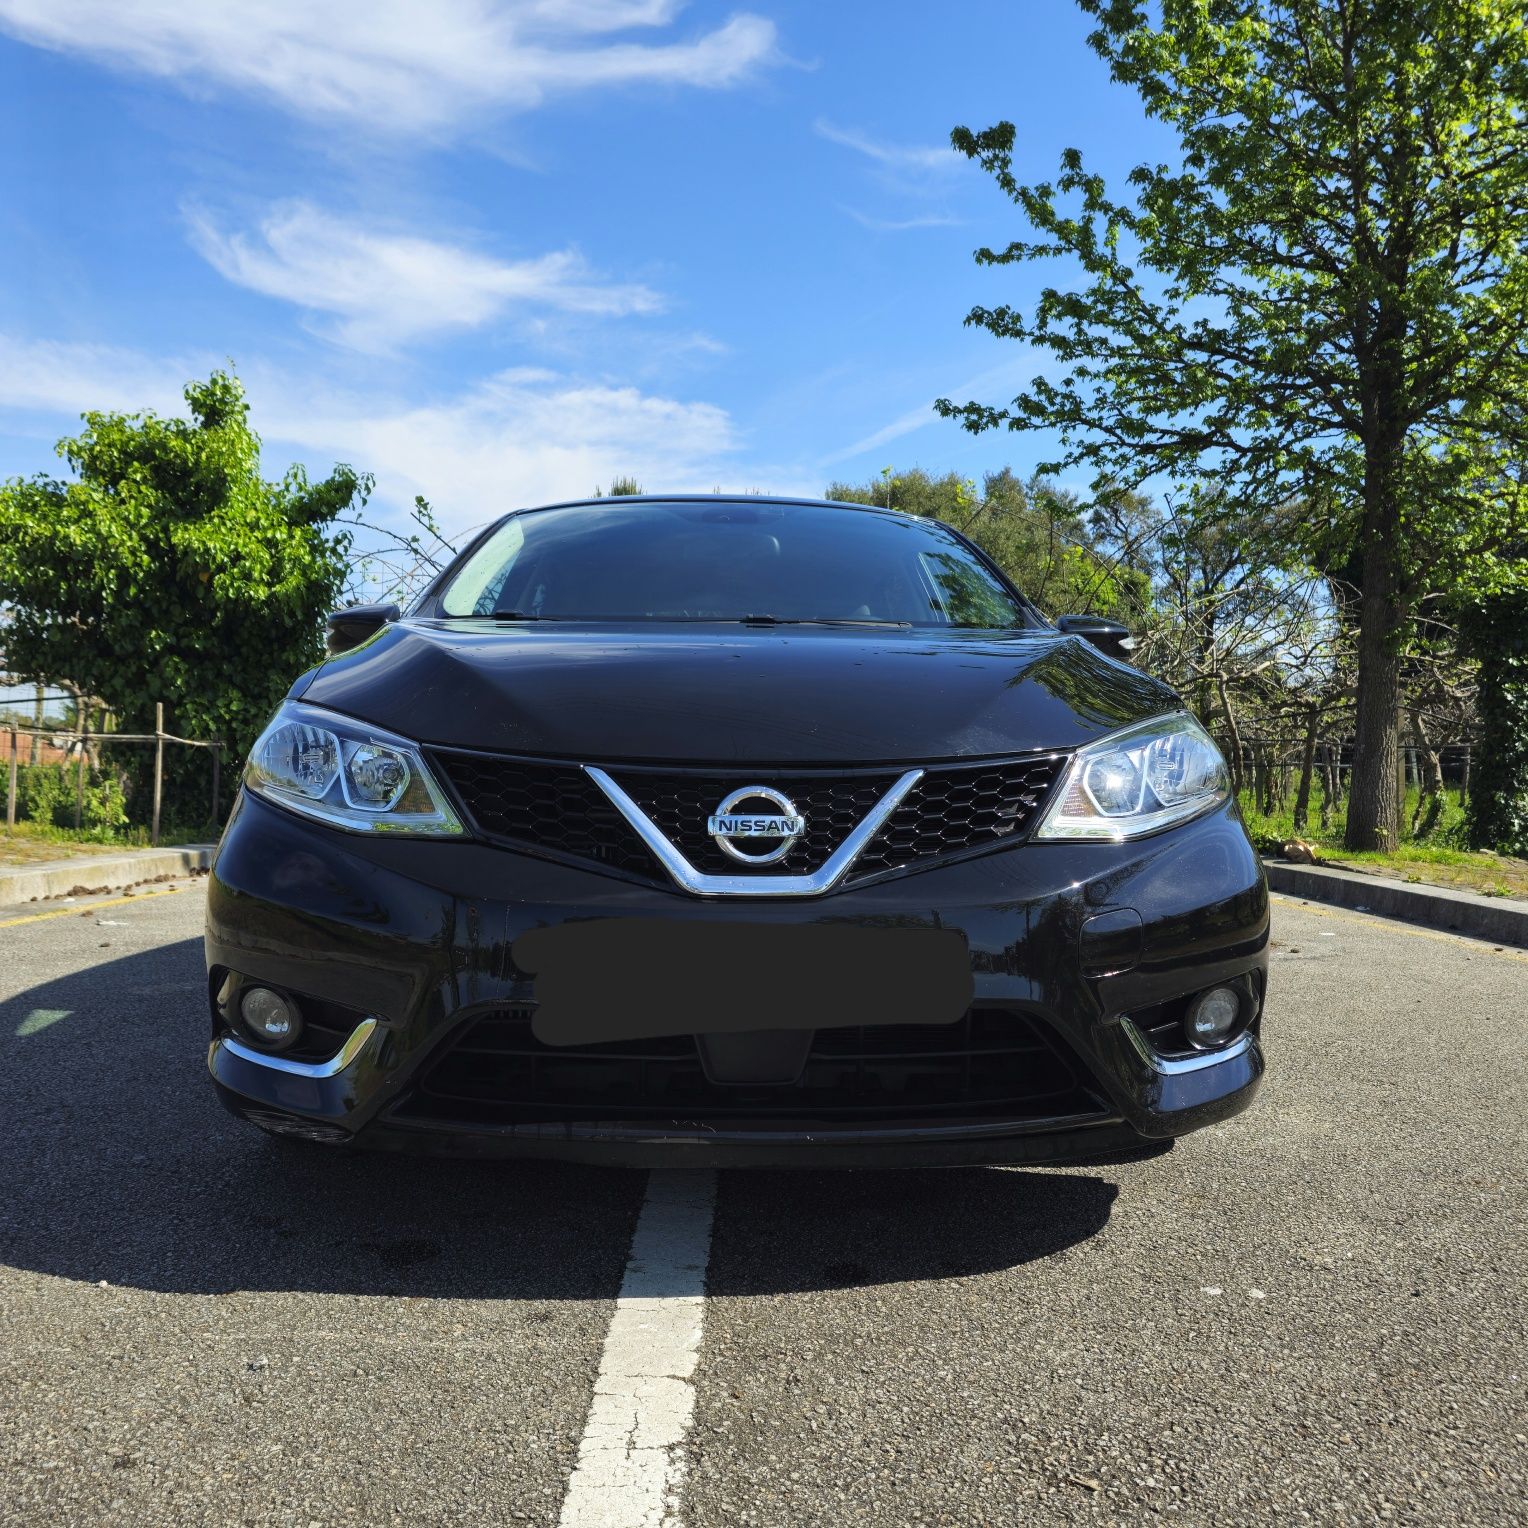 Nissan Pulsar 2016 - Economia e Fiabilidade Garantidas!